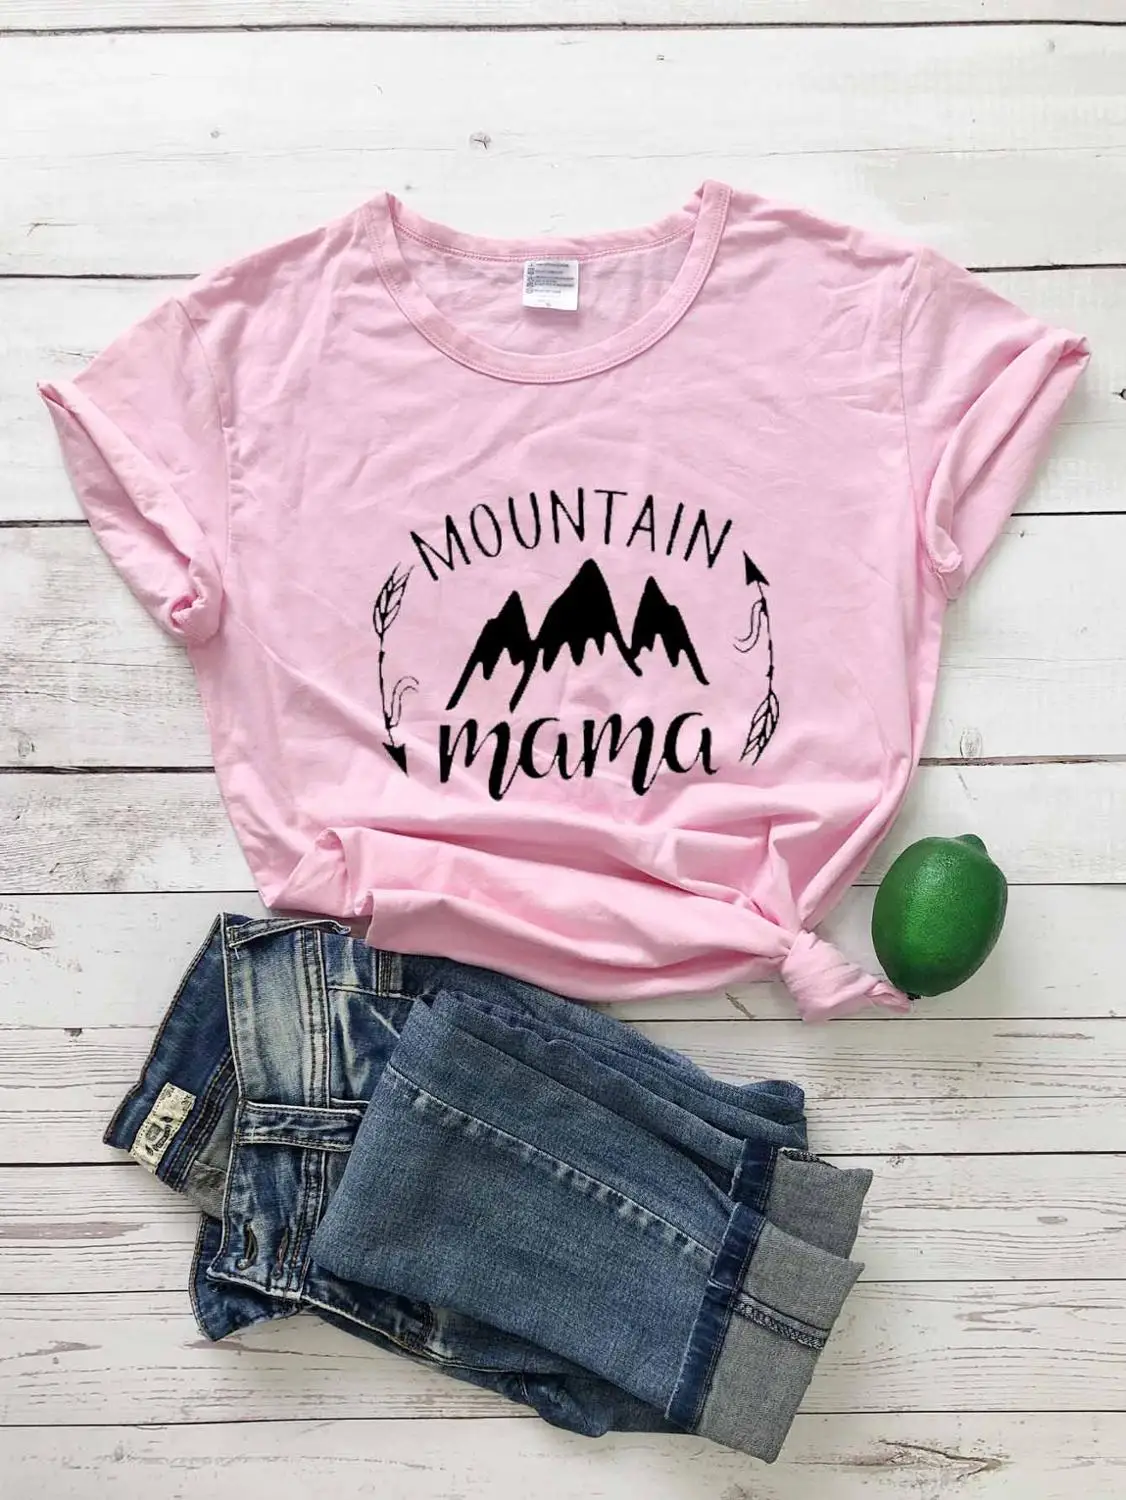 

Mountain Mama camiseta rosa feminina pink women fashion pure cotton casual mother days gift t shirt grunge tumblr vintage tees